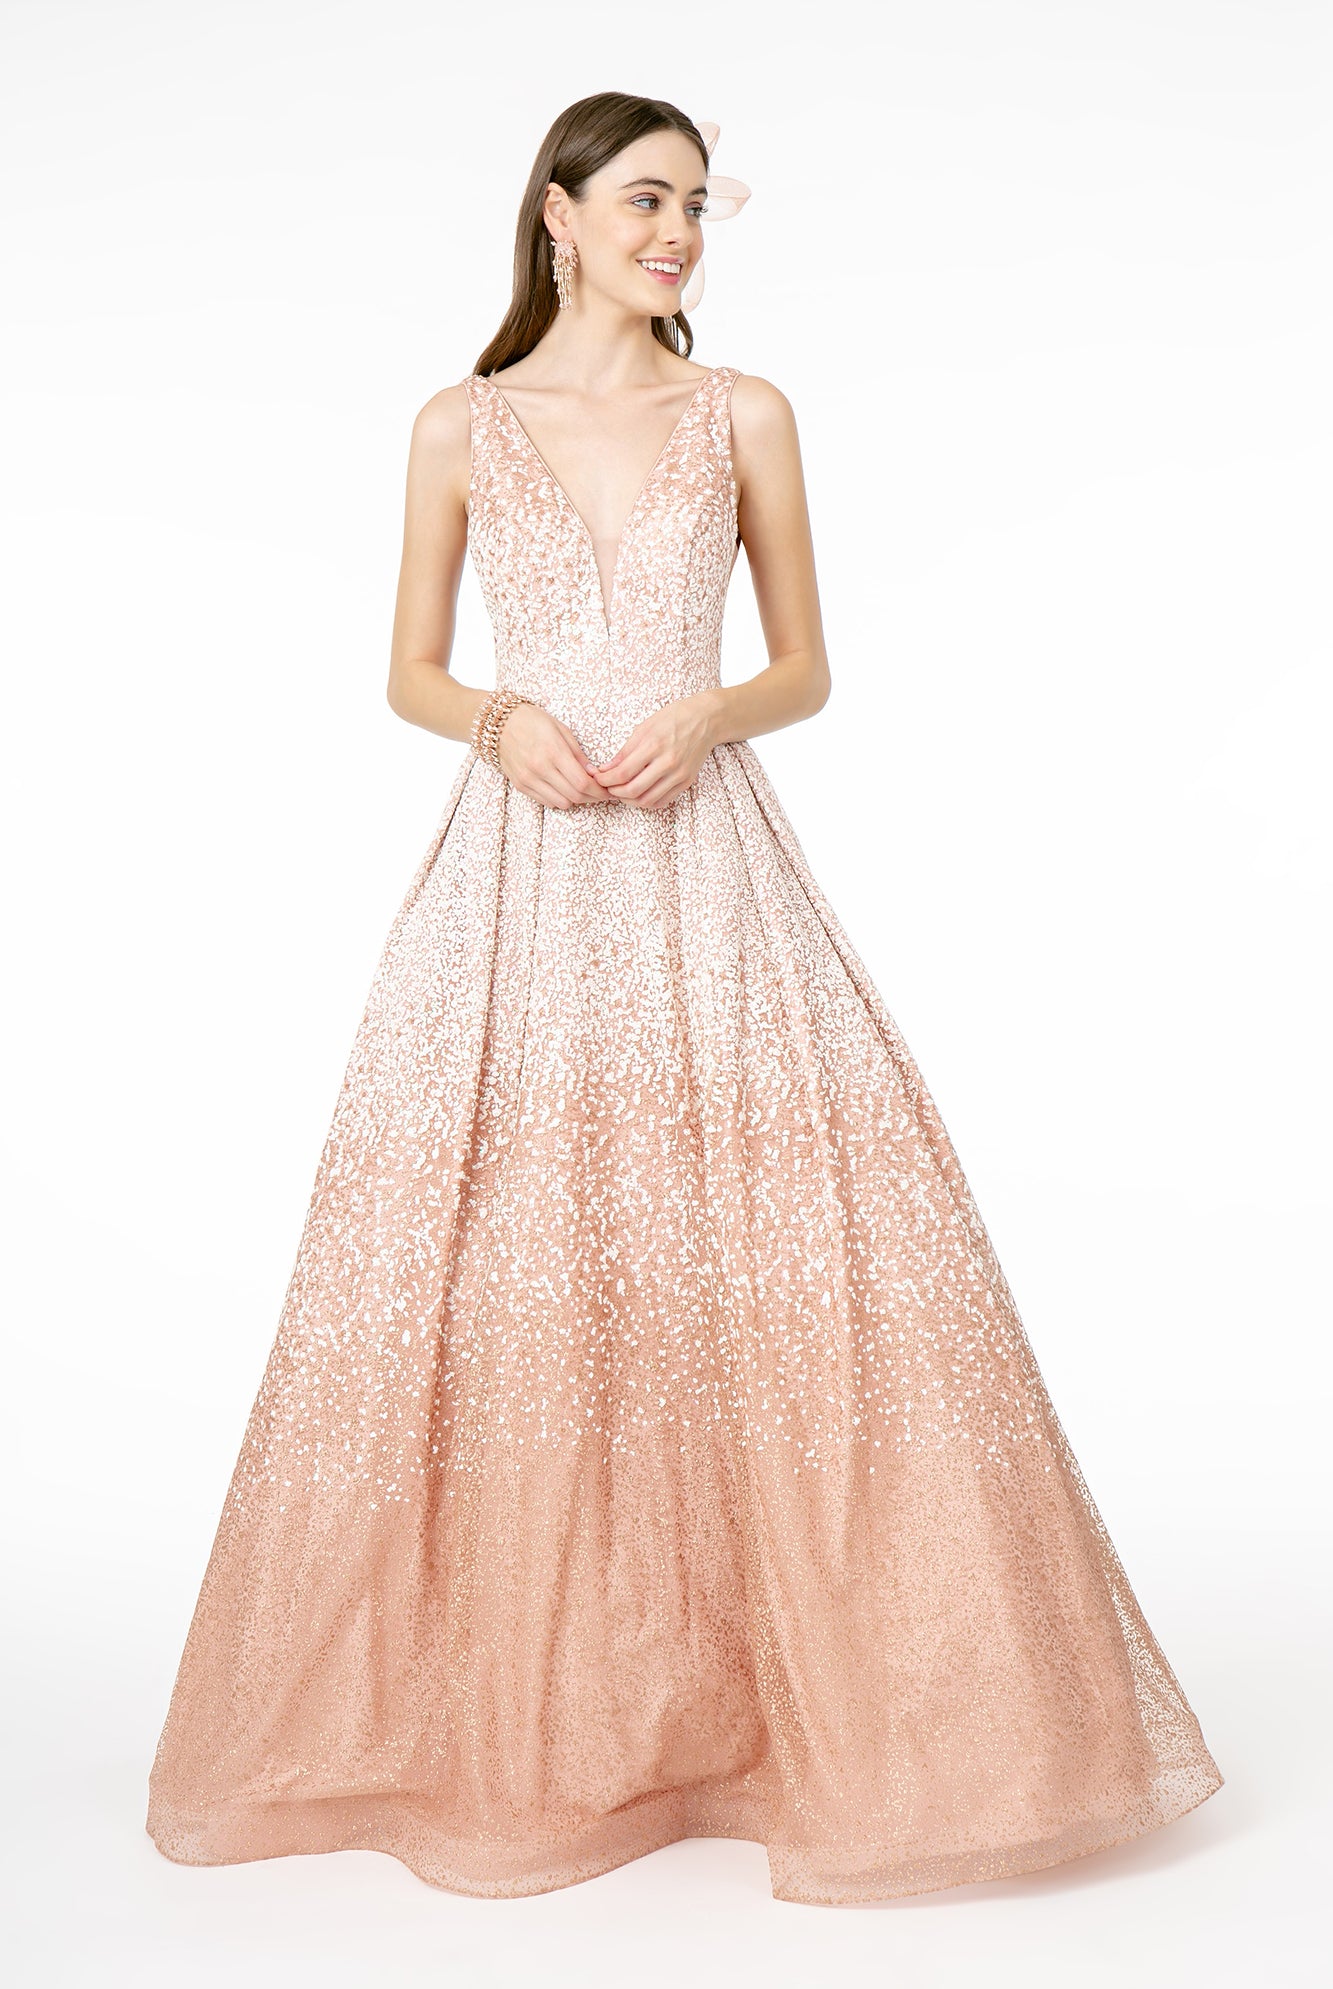 Blush prom dress-smcdress